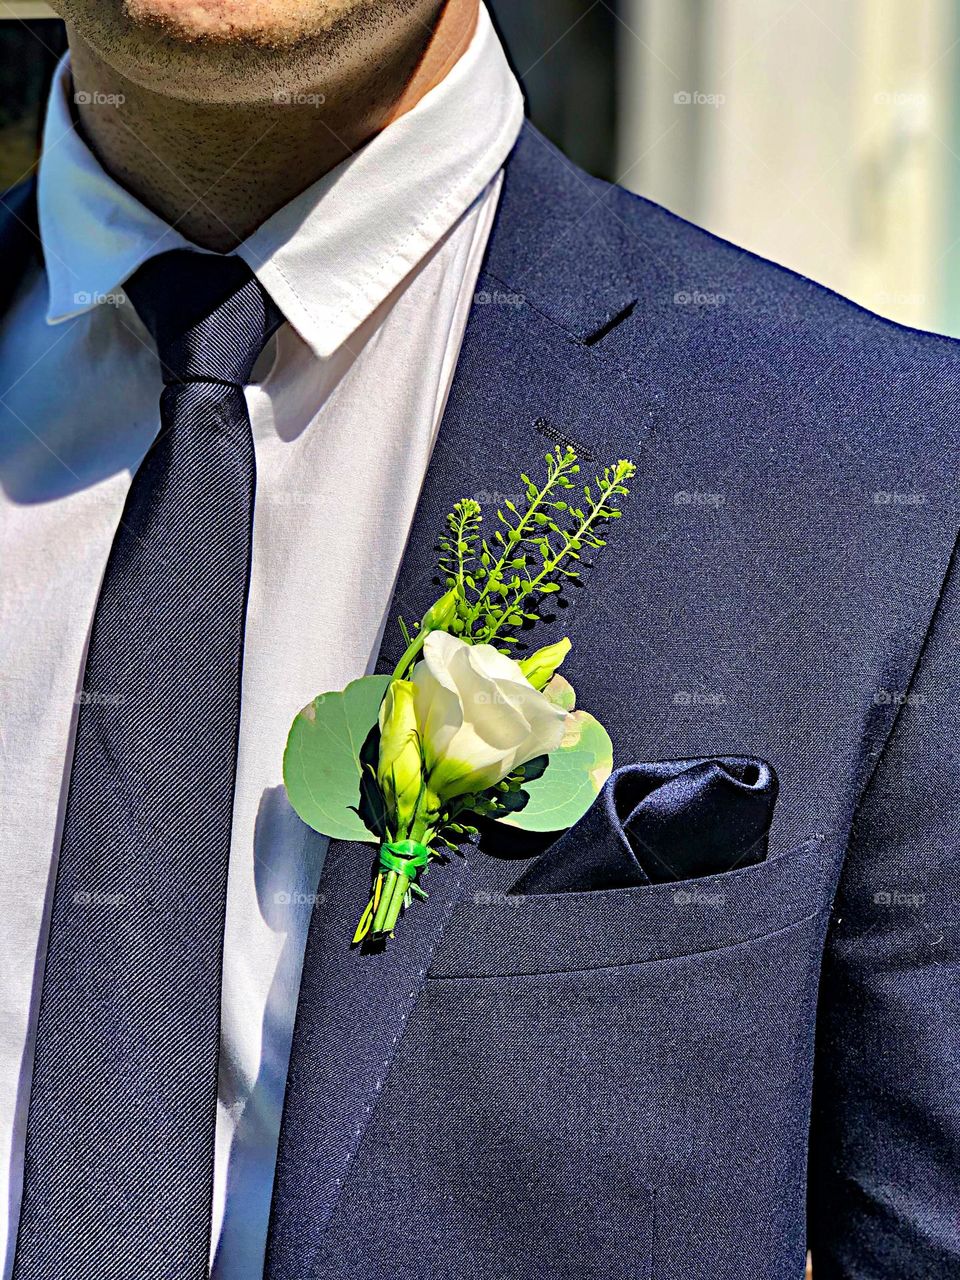 The groom’s blazer flower